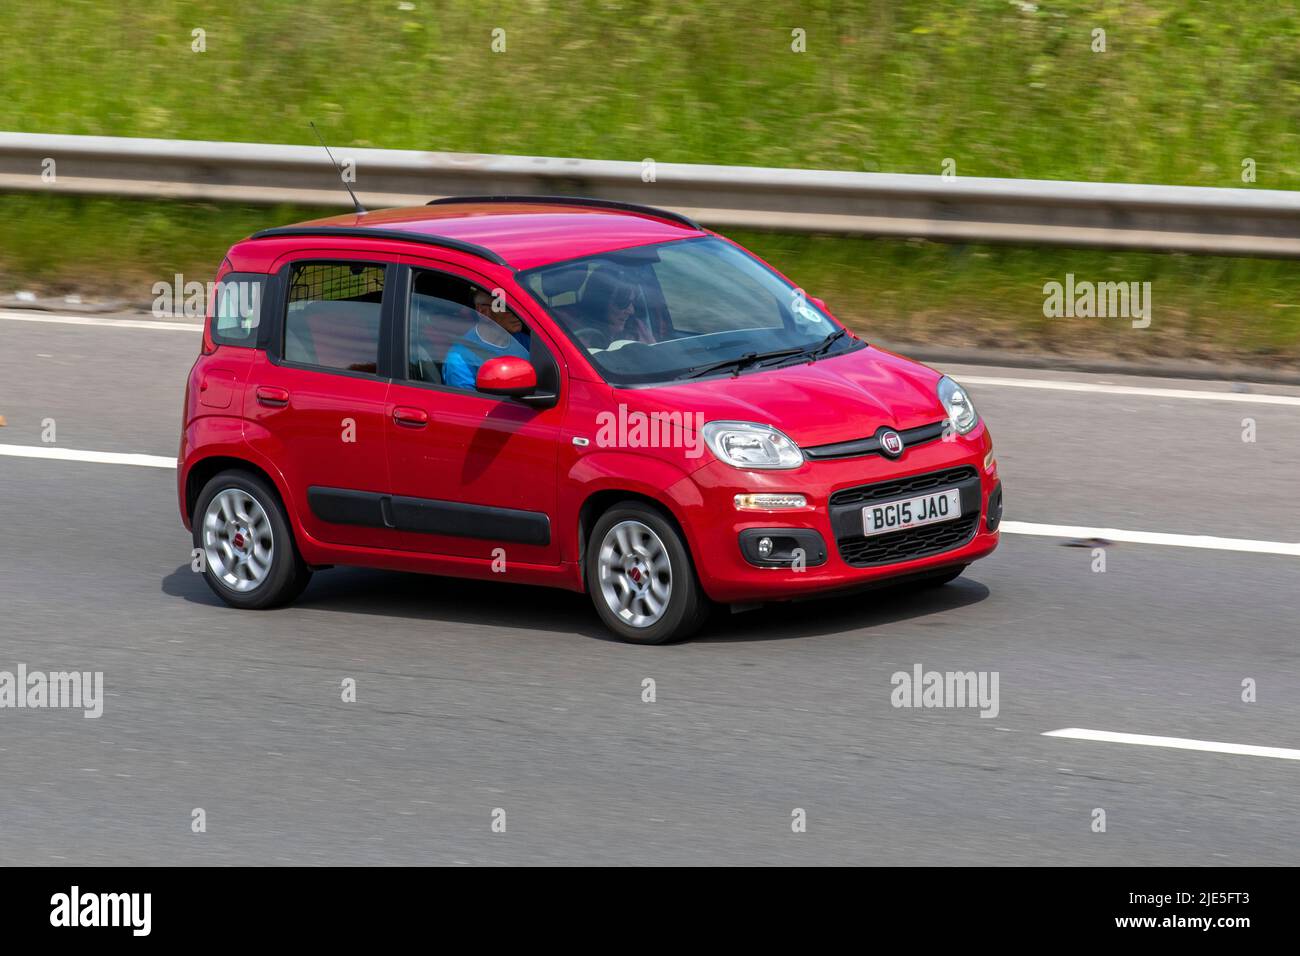 2015 (15) red FIAT PANDA POP 1242cc petrol small Italian city car;  traveling on the M6 motorway, UK Stock Photo